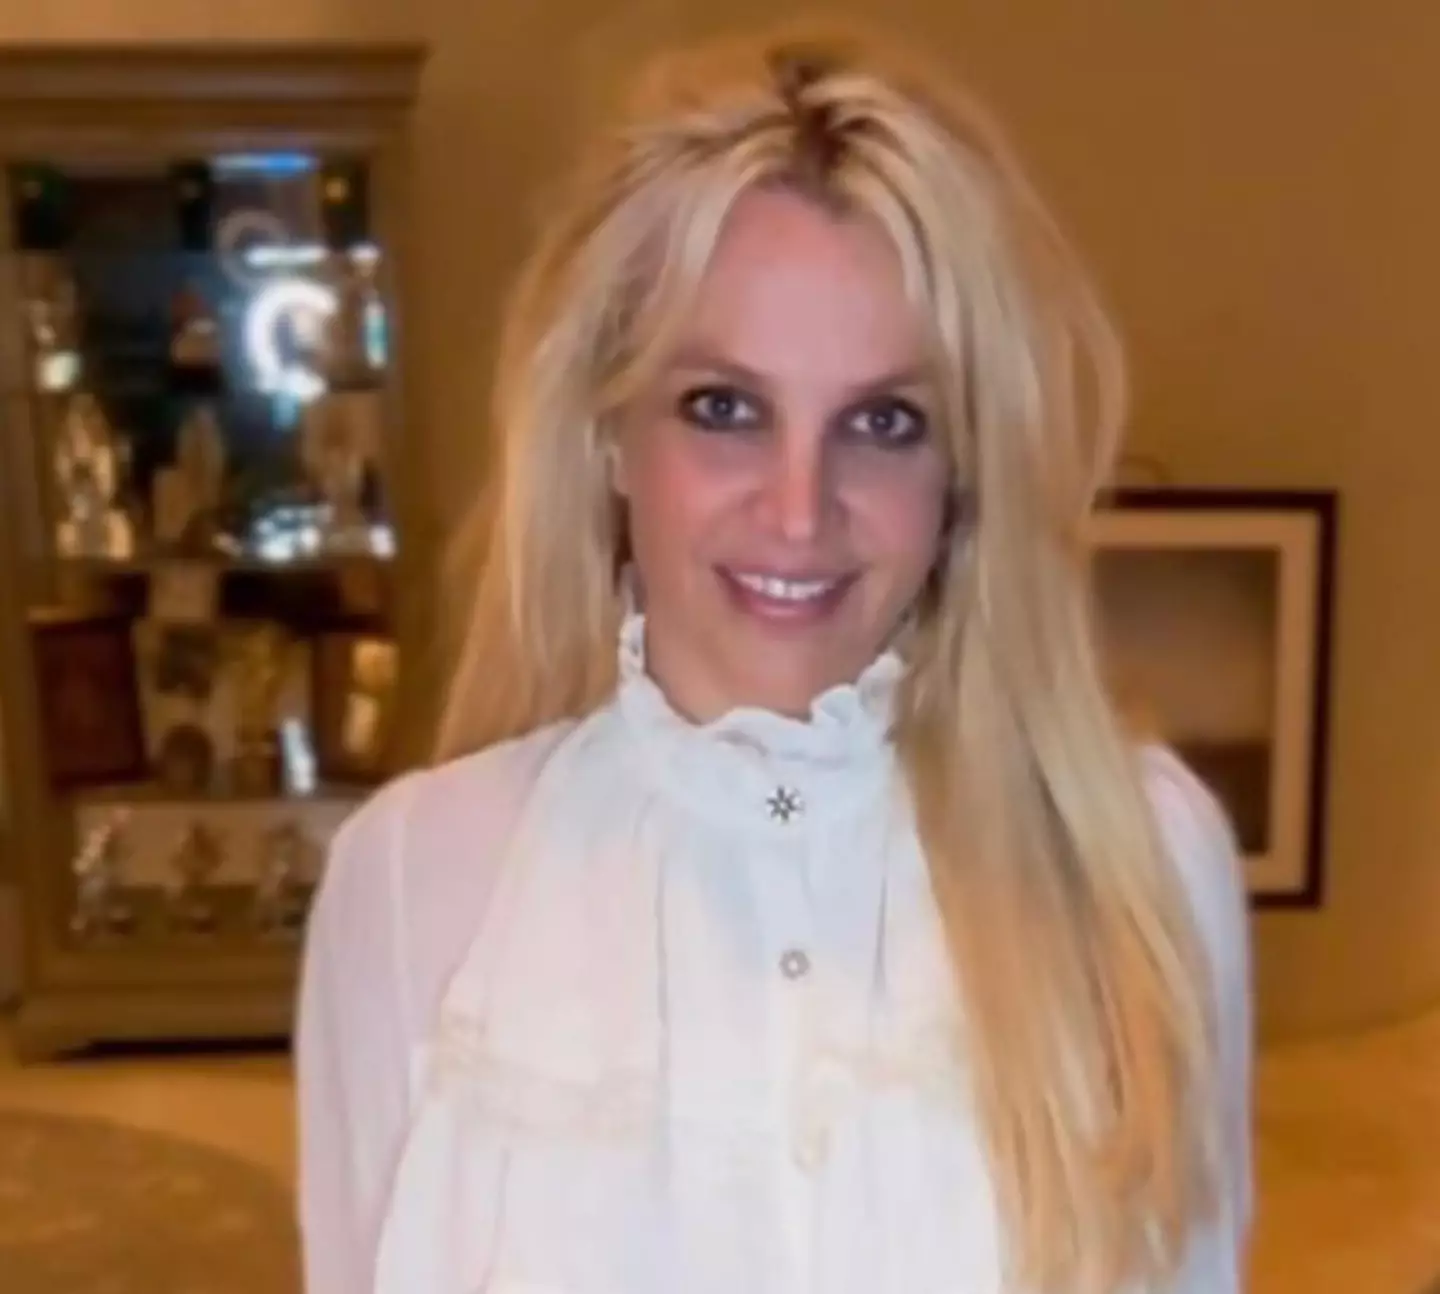 Britney Spears fans regularly share concerns over the singer.